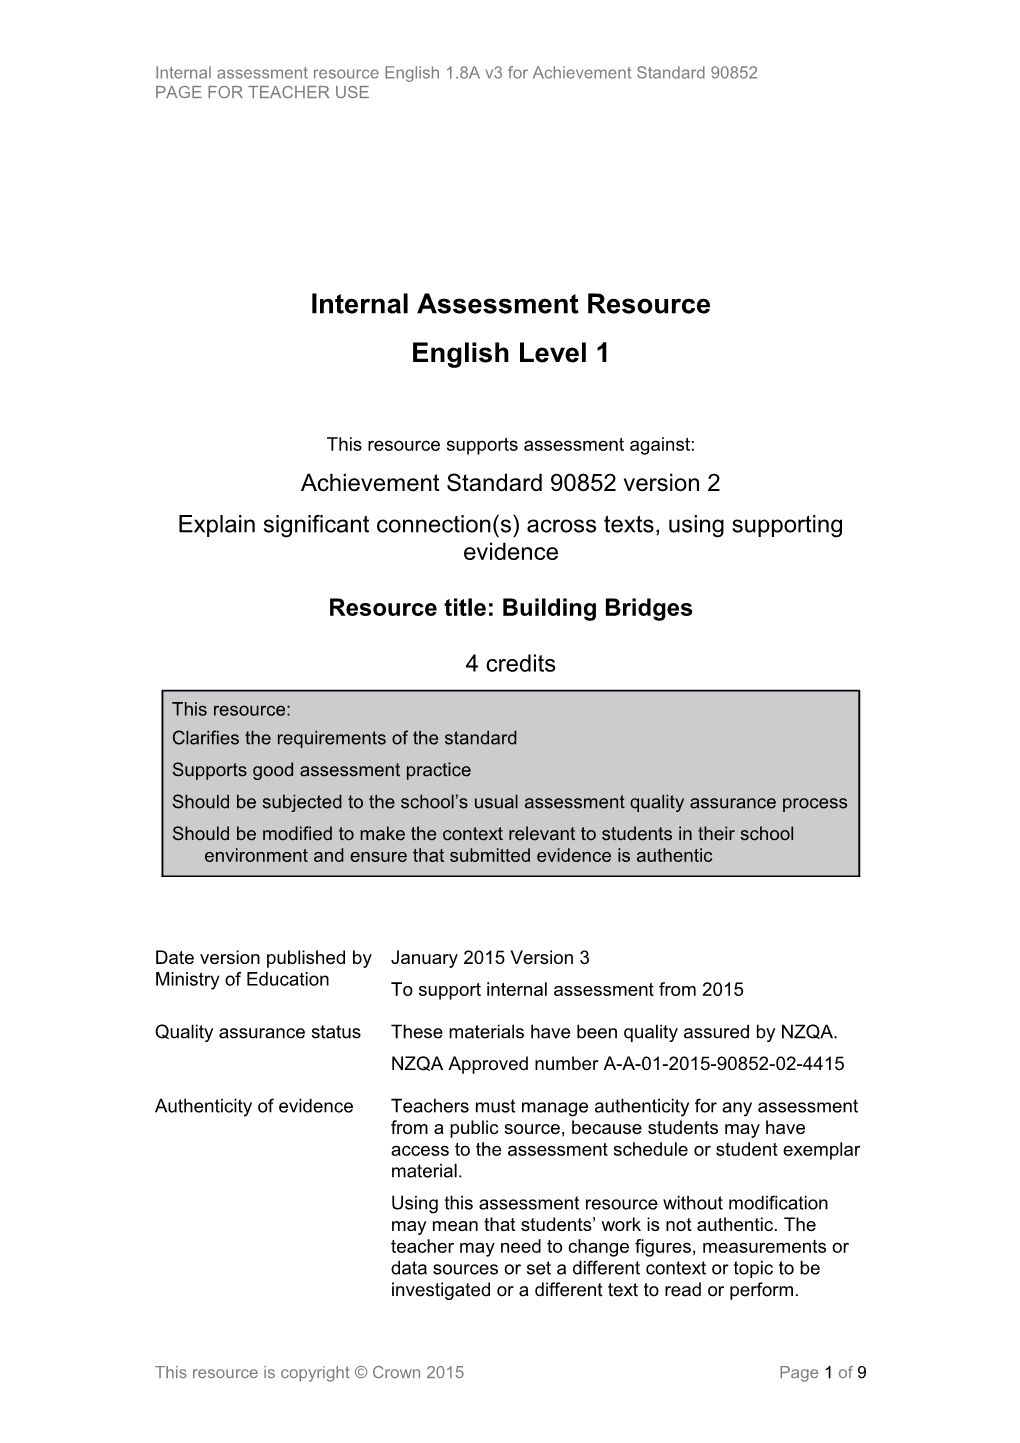 Level 1 English Internal Assessment Resource